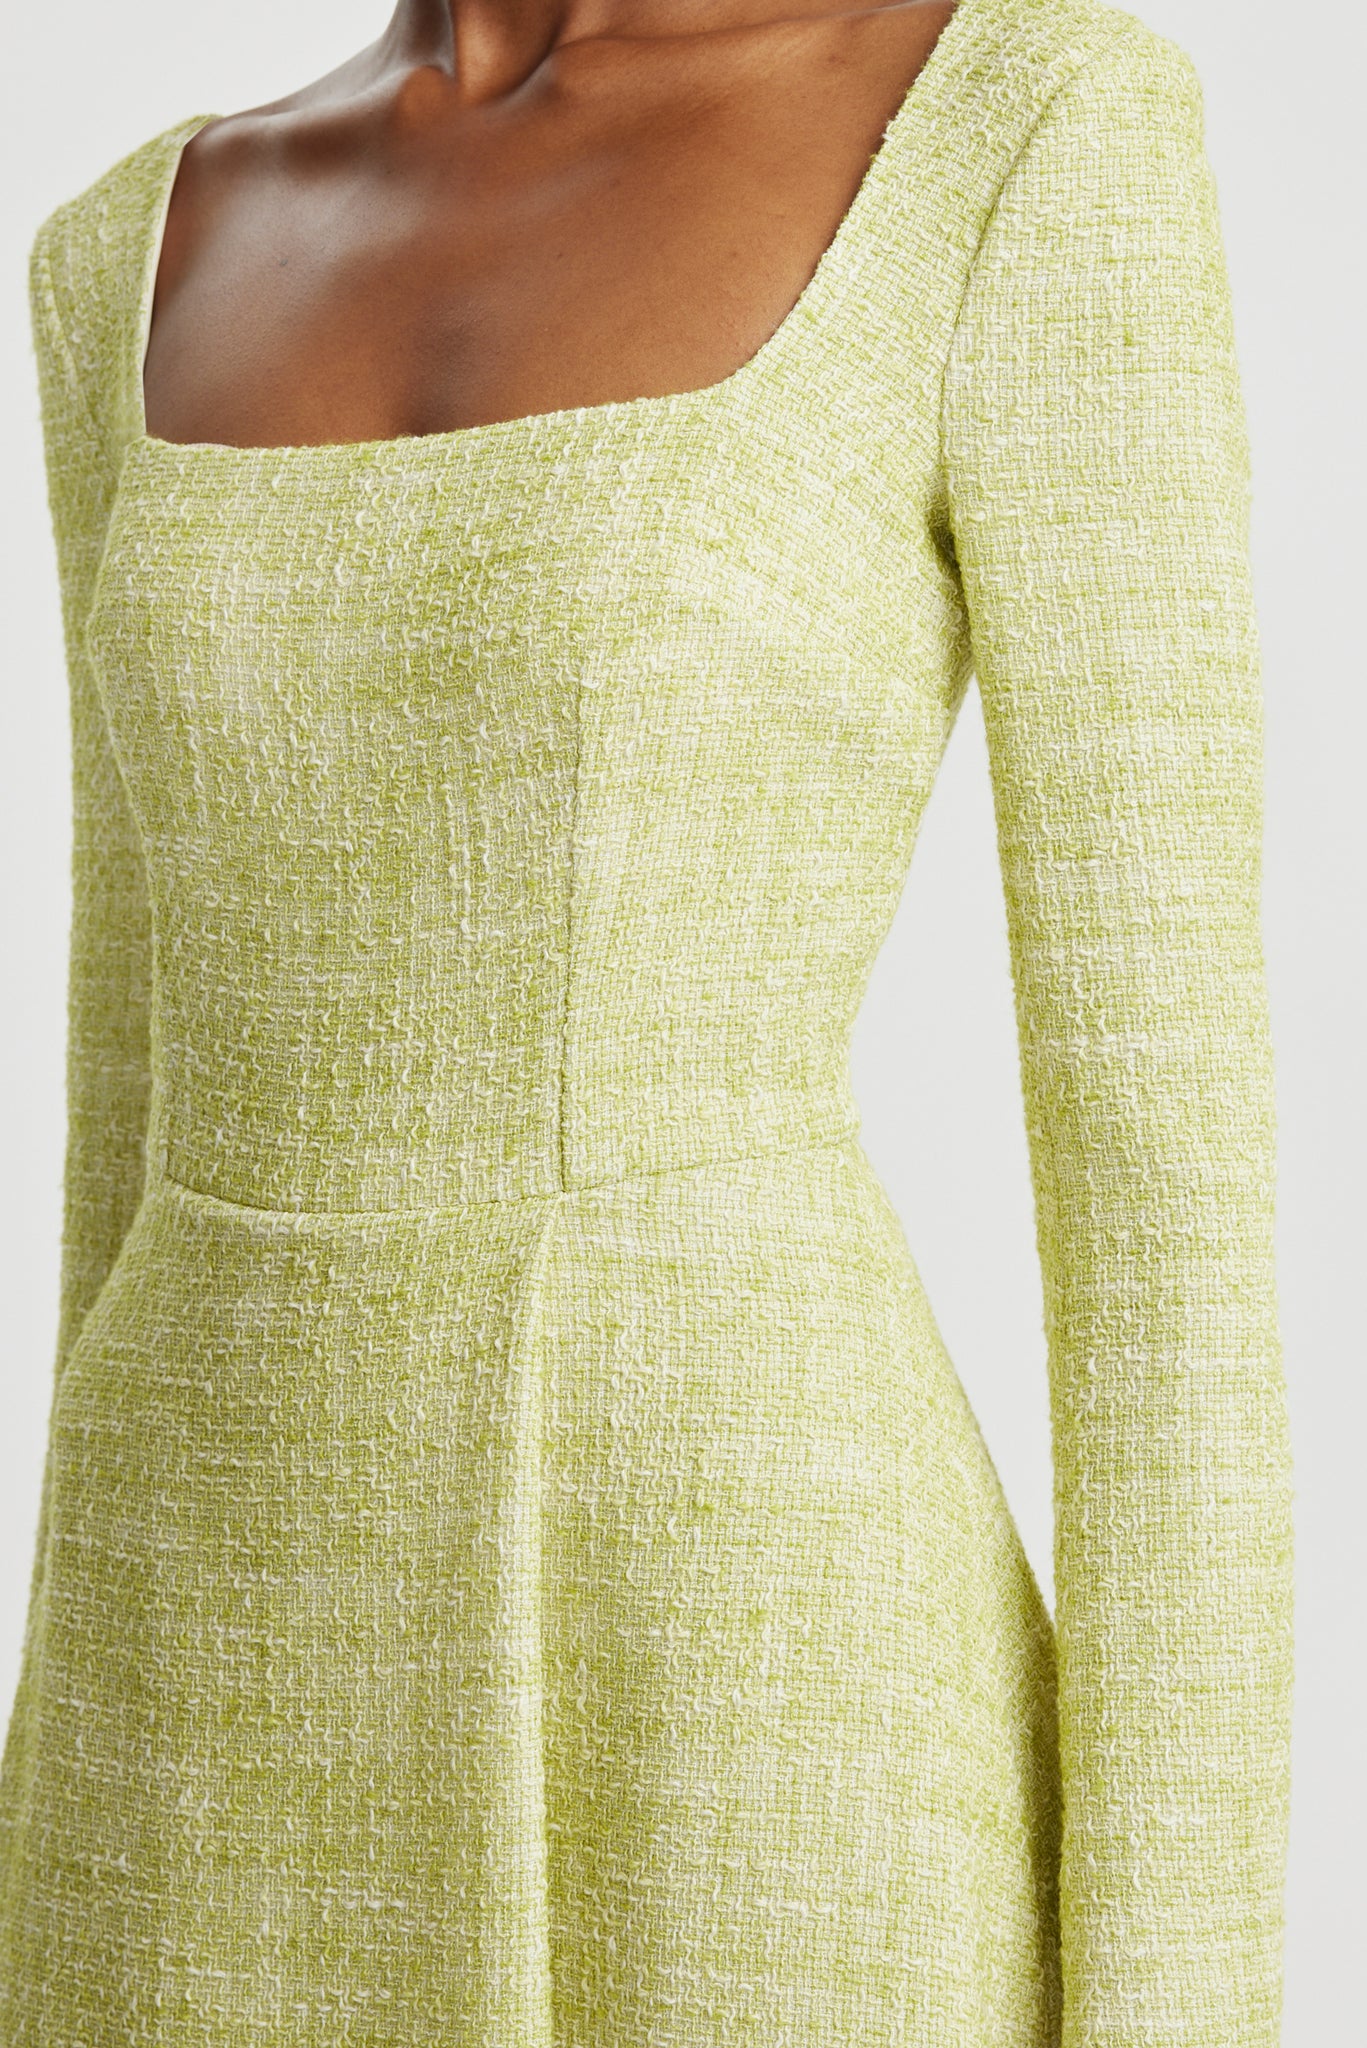 Fara Dress In Apple Green Cotton Tweed | Emilia Wickstead